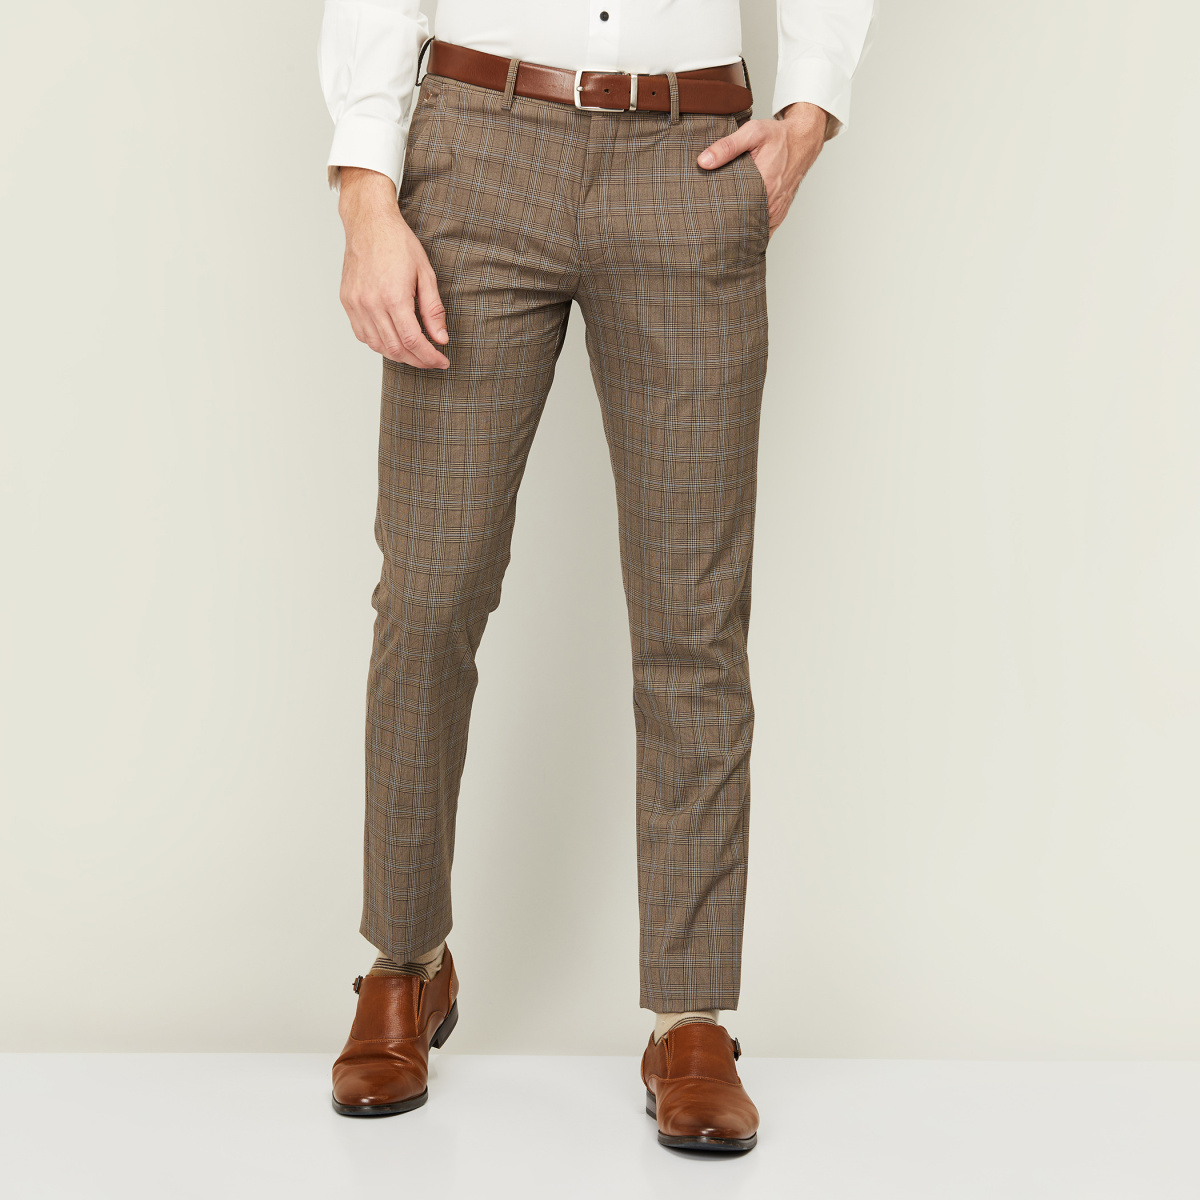 Buy Men Cream Solid Slim Fit Formal Trousers Online  715804  Peter England